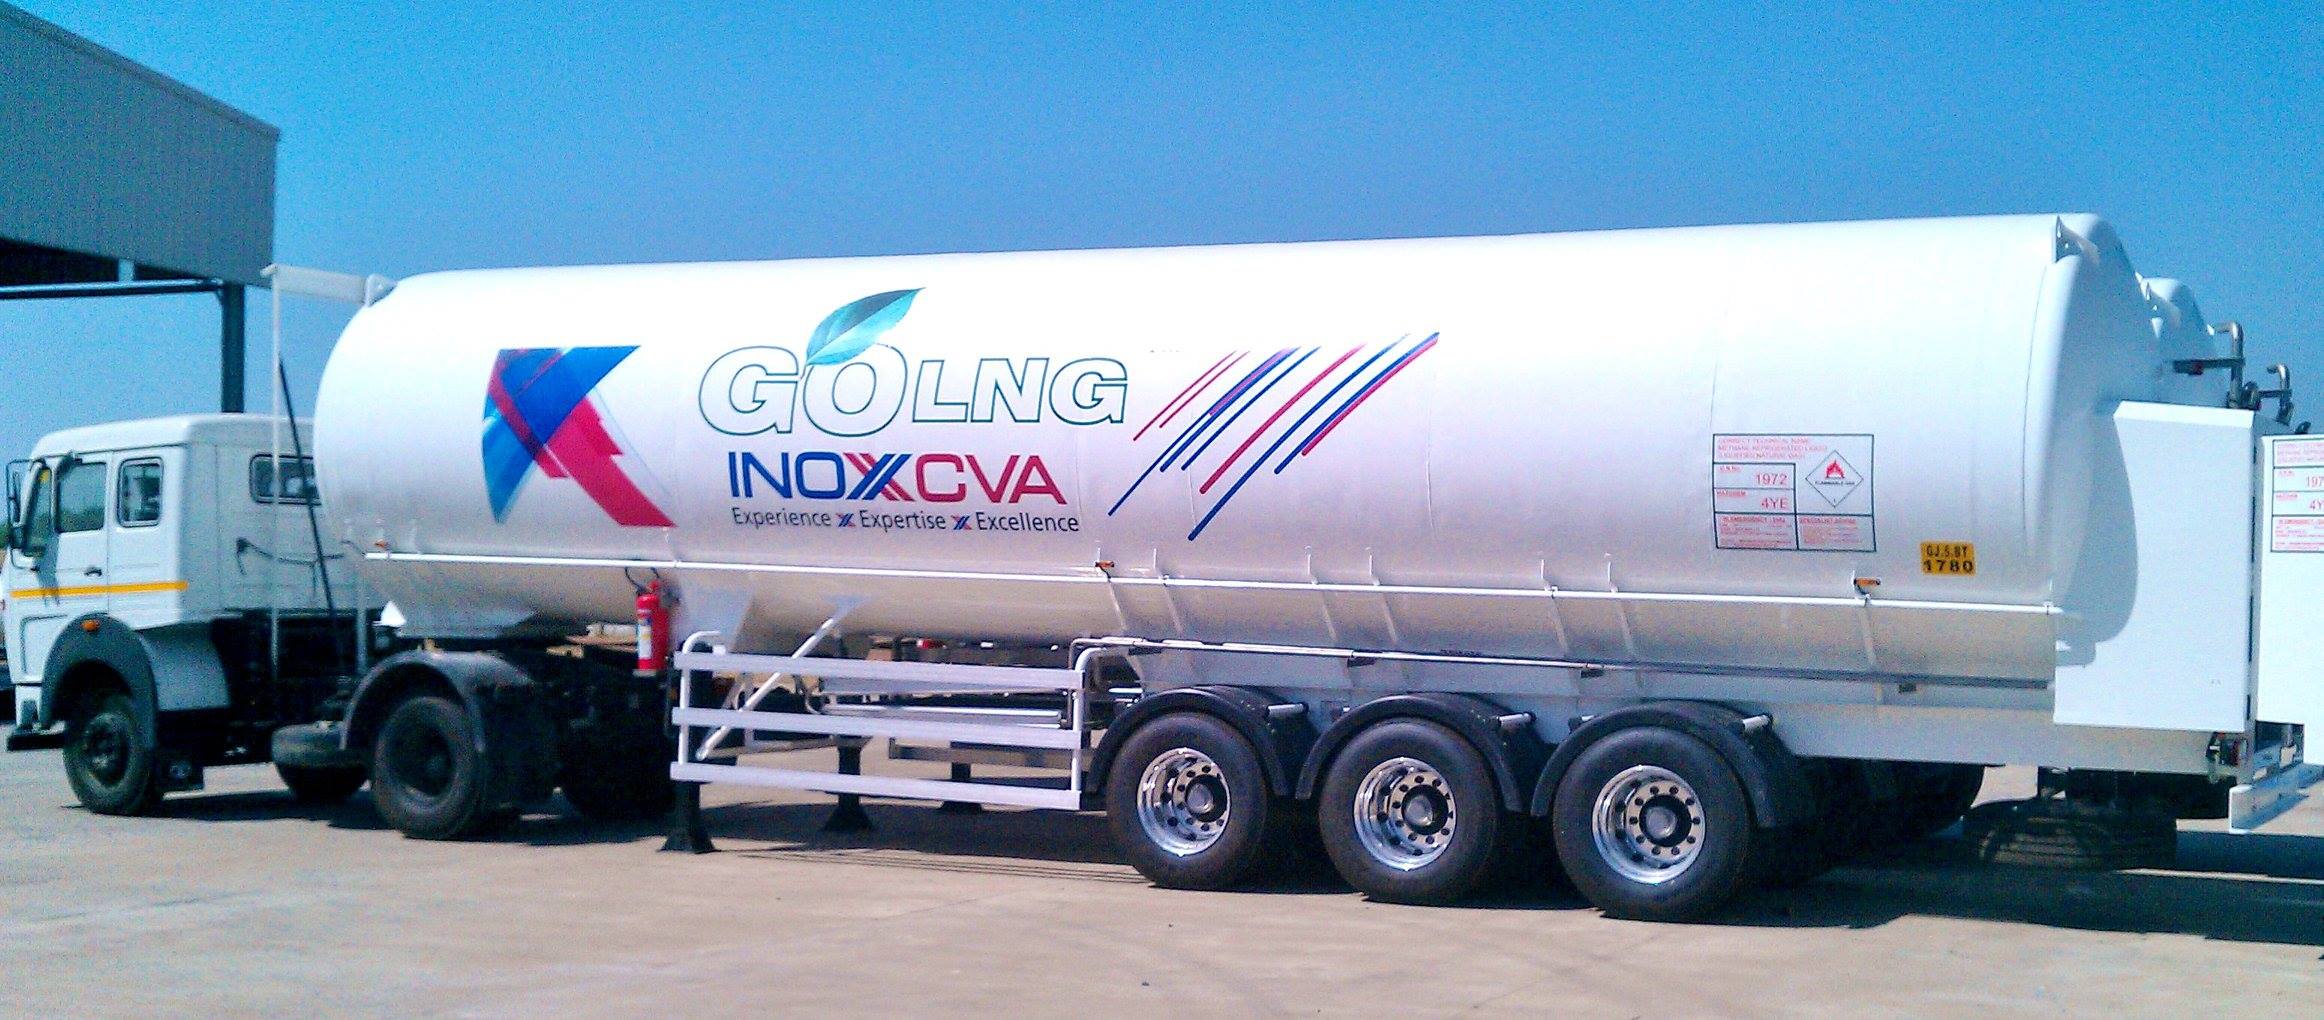 INOXCVA sets up LNG Dispenser in India